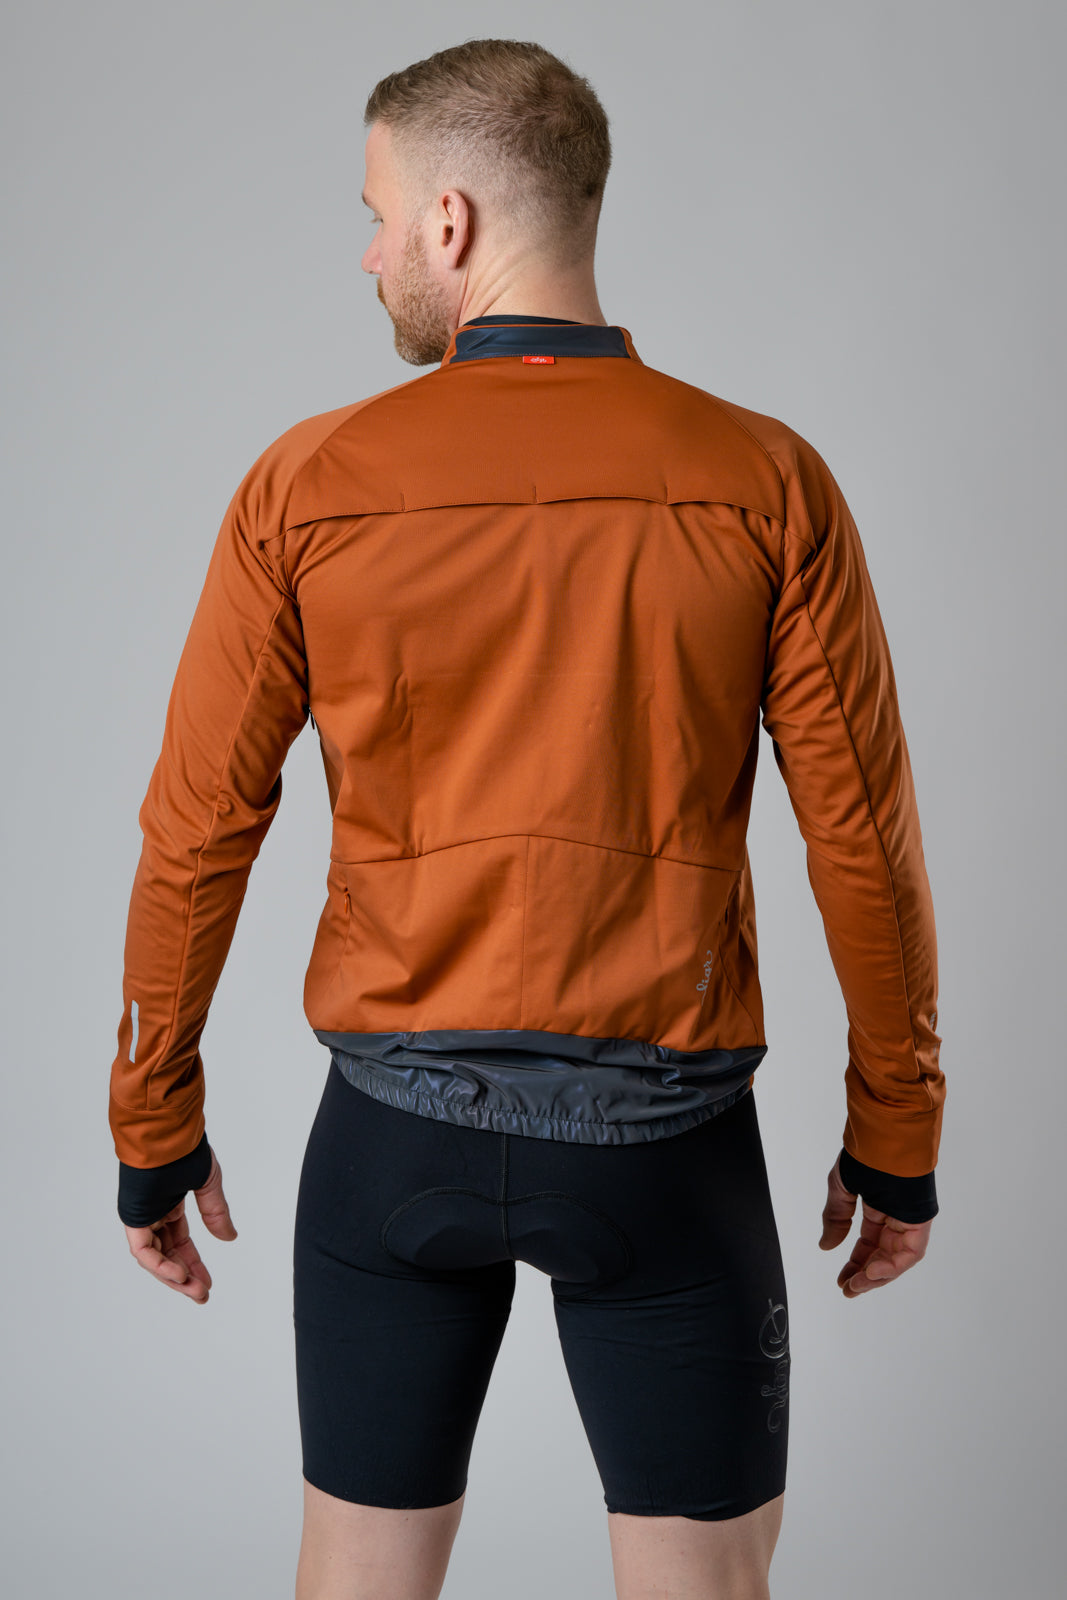 Sigr Gotlandsleden Tour - Brown Soft Shell Merino Cycling Jacket for Men